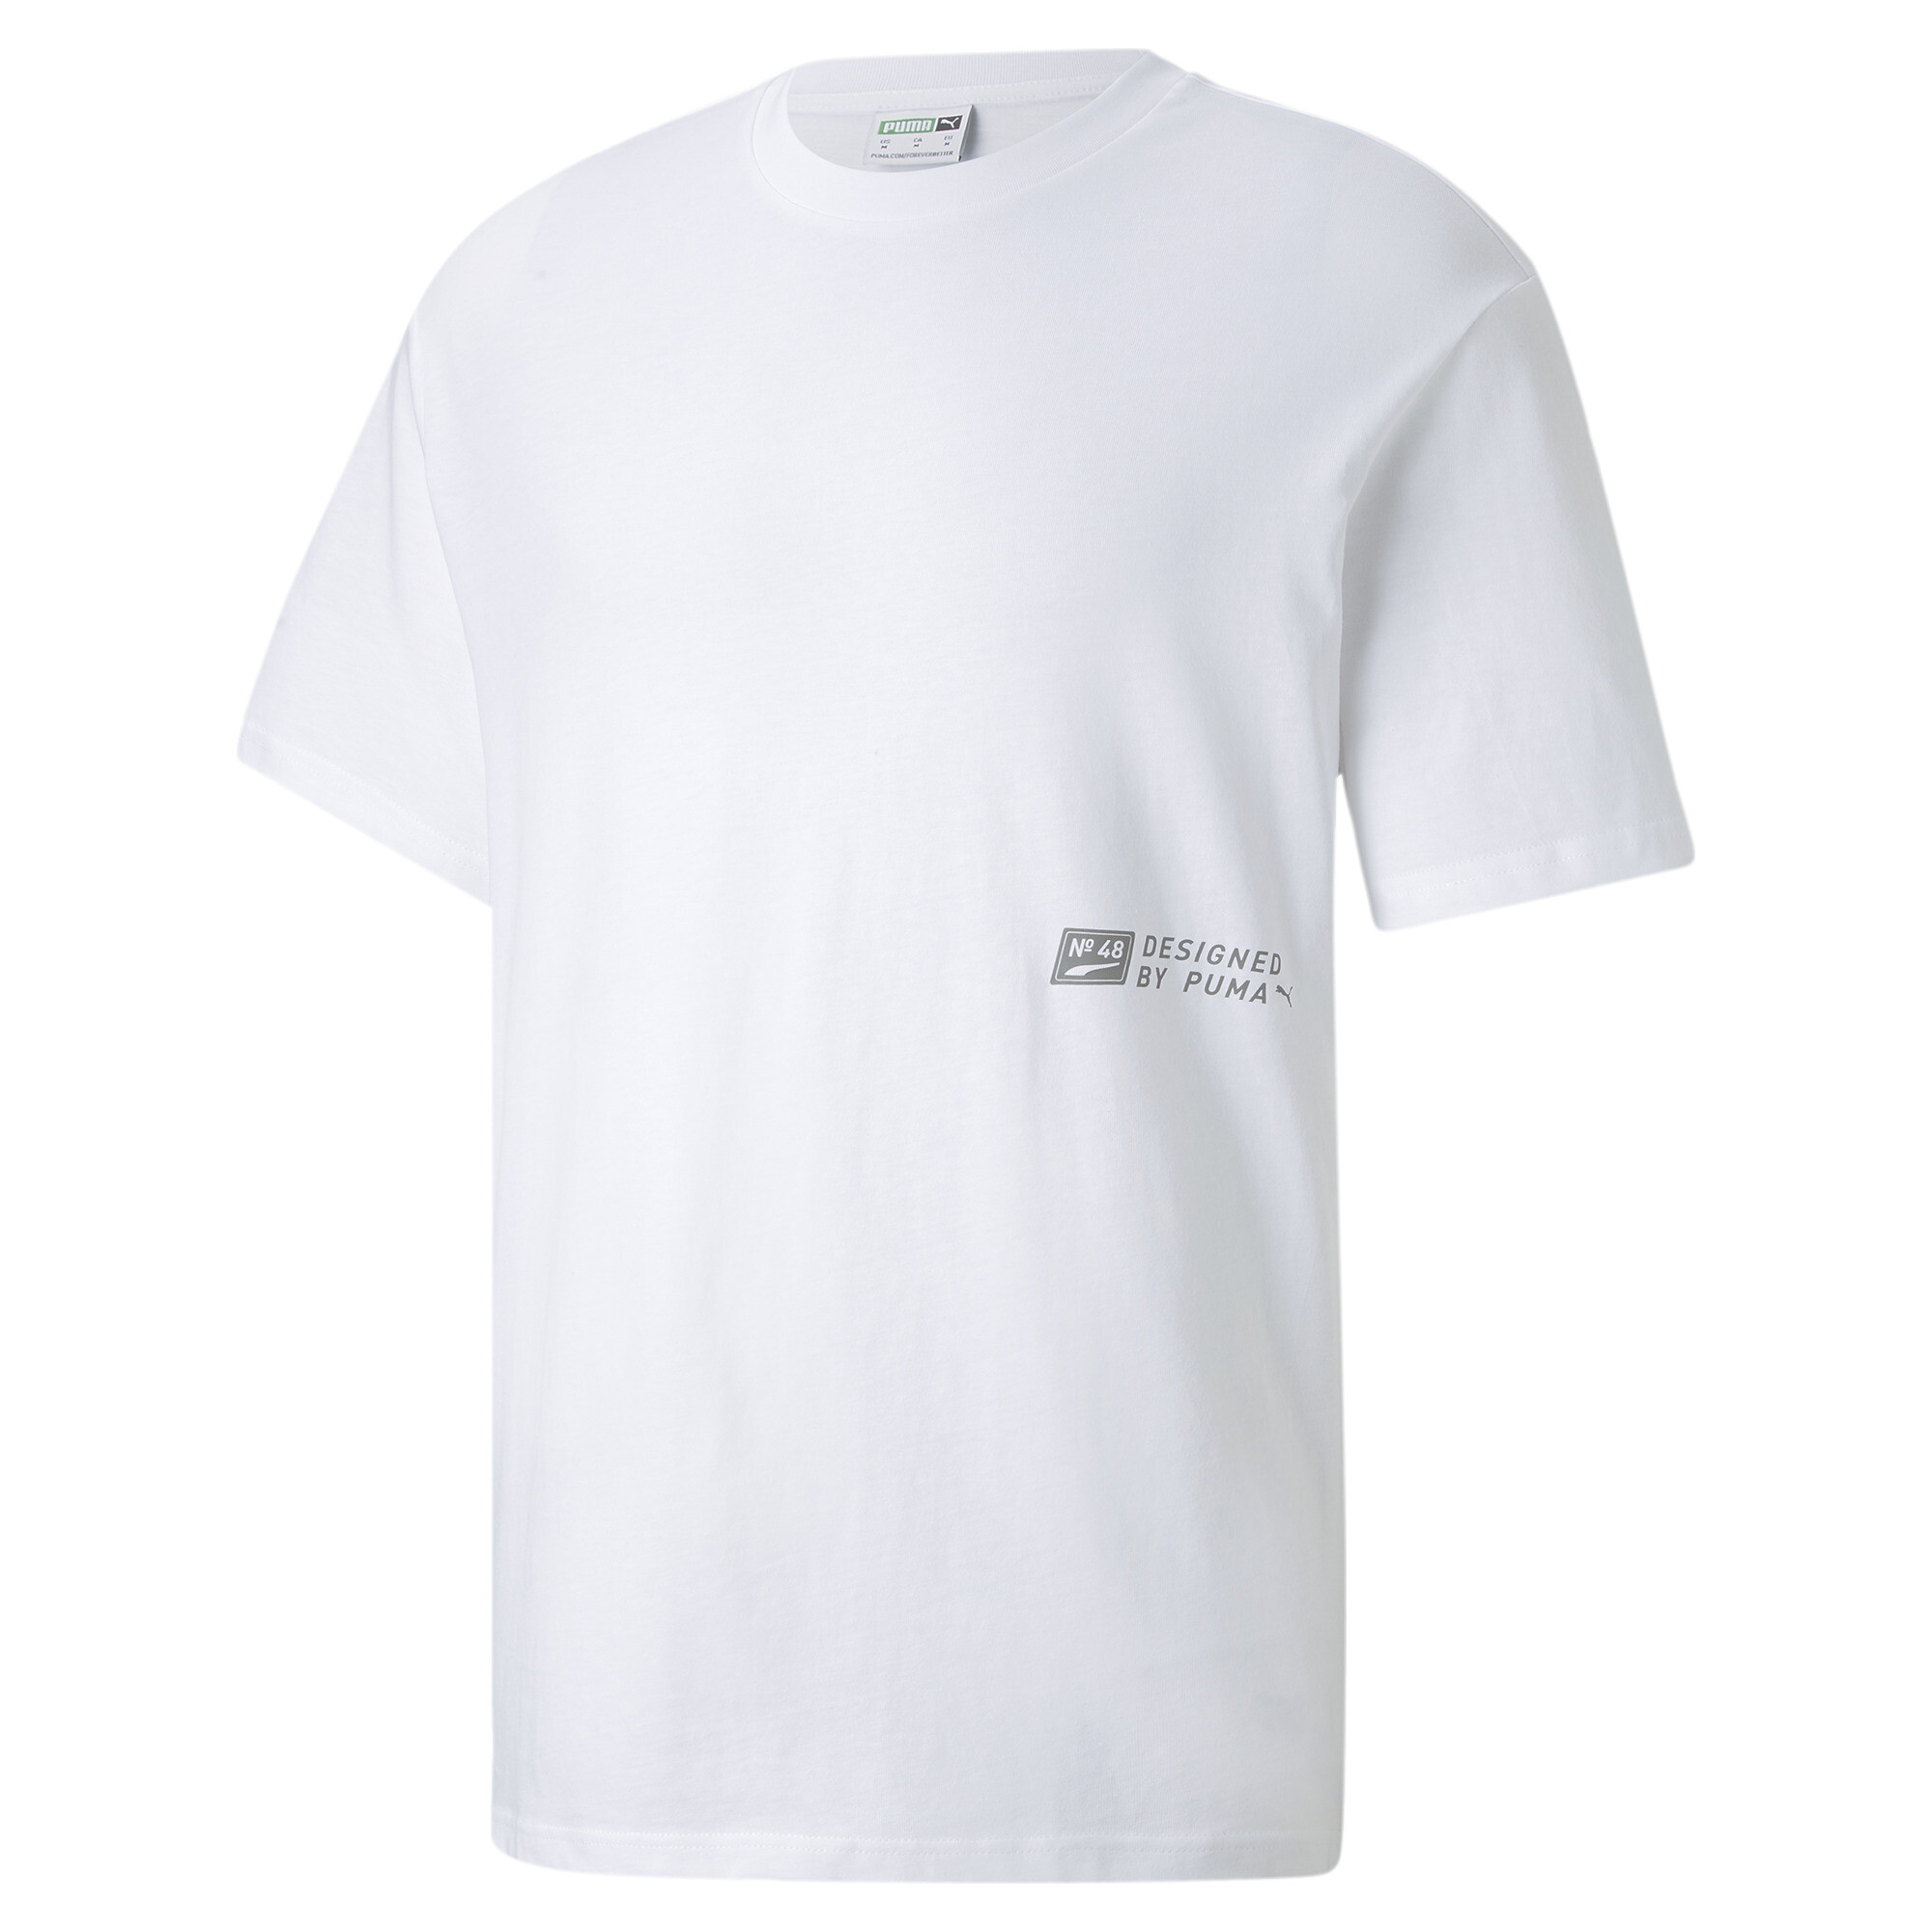 Men's Puma Graphic's T-Shirt, White, Size M, Clothing